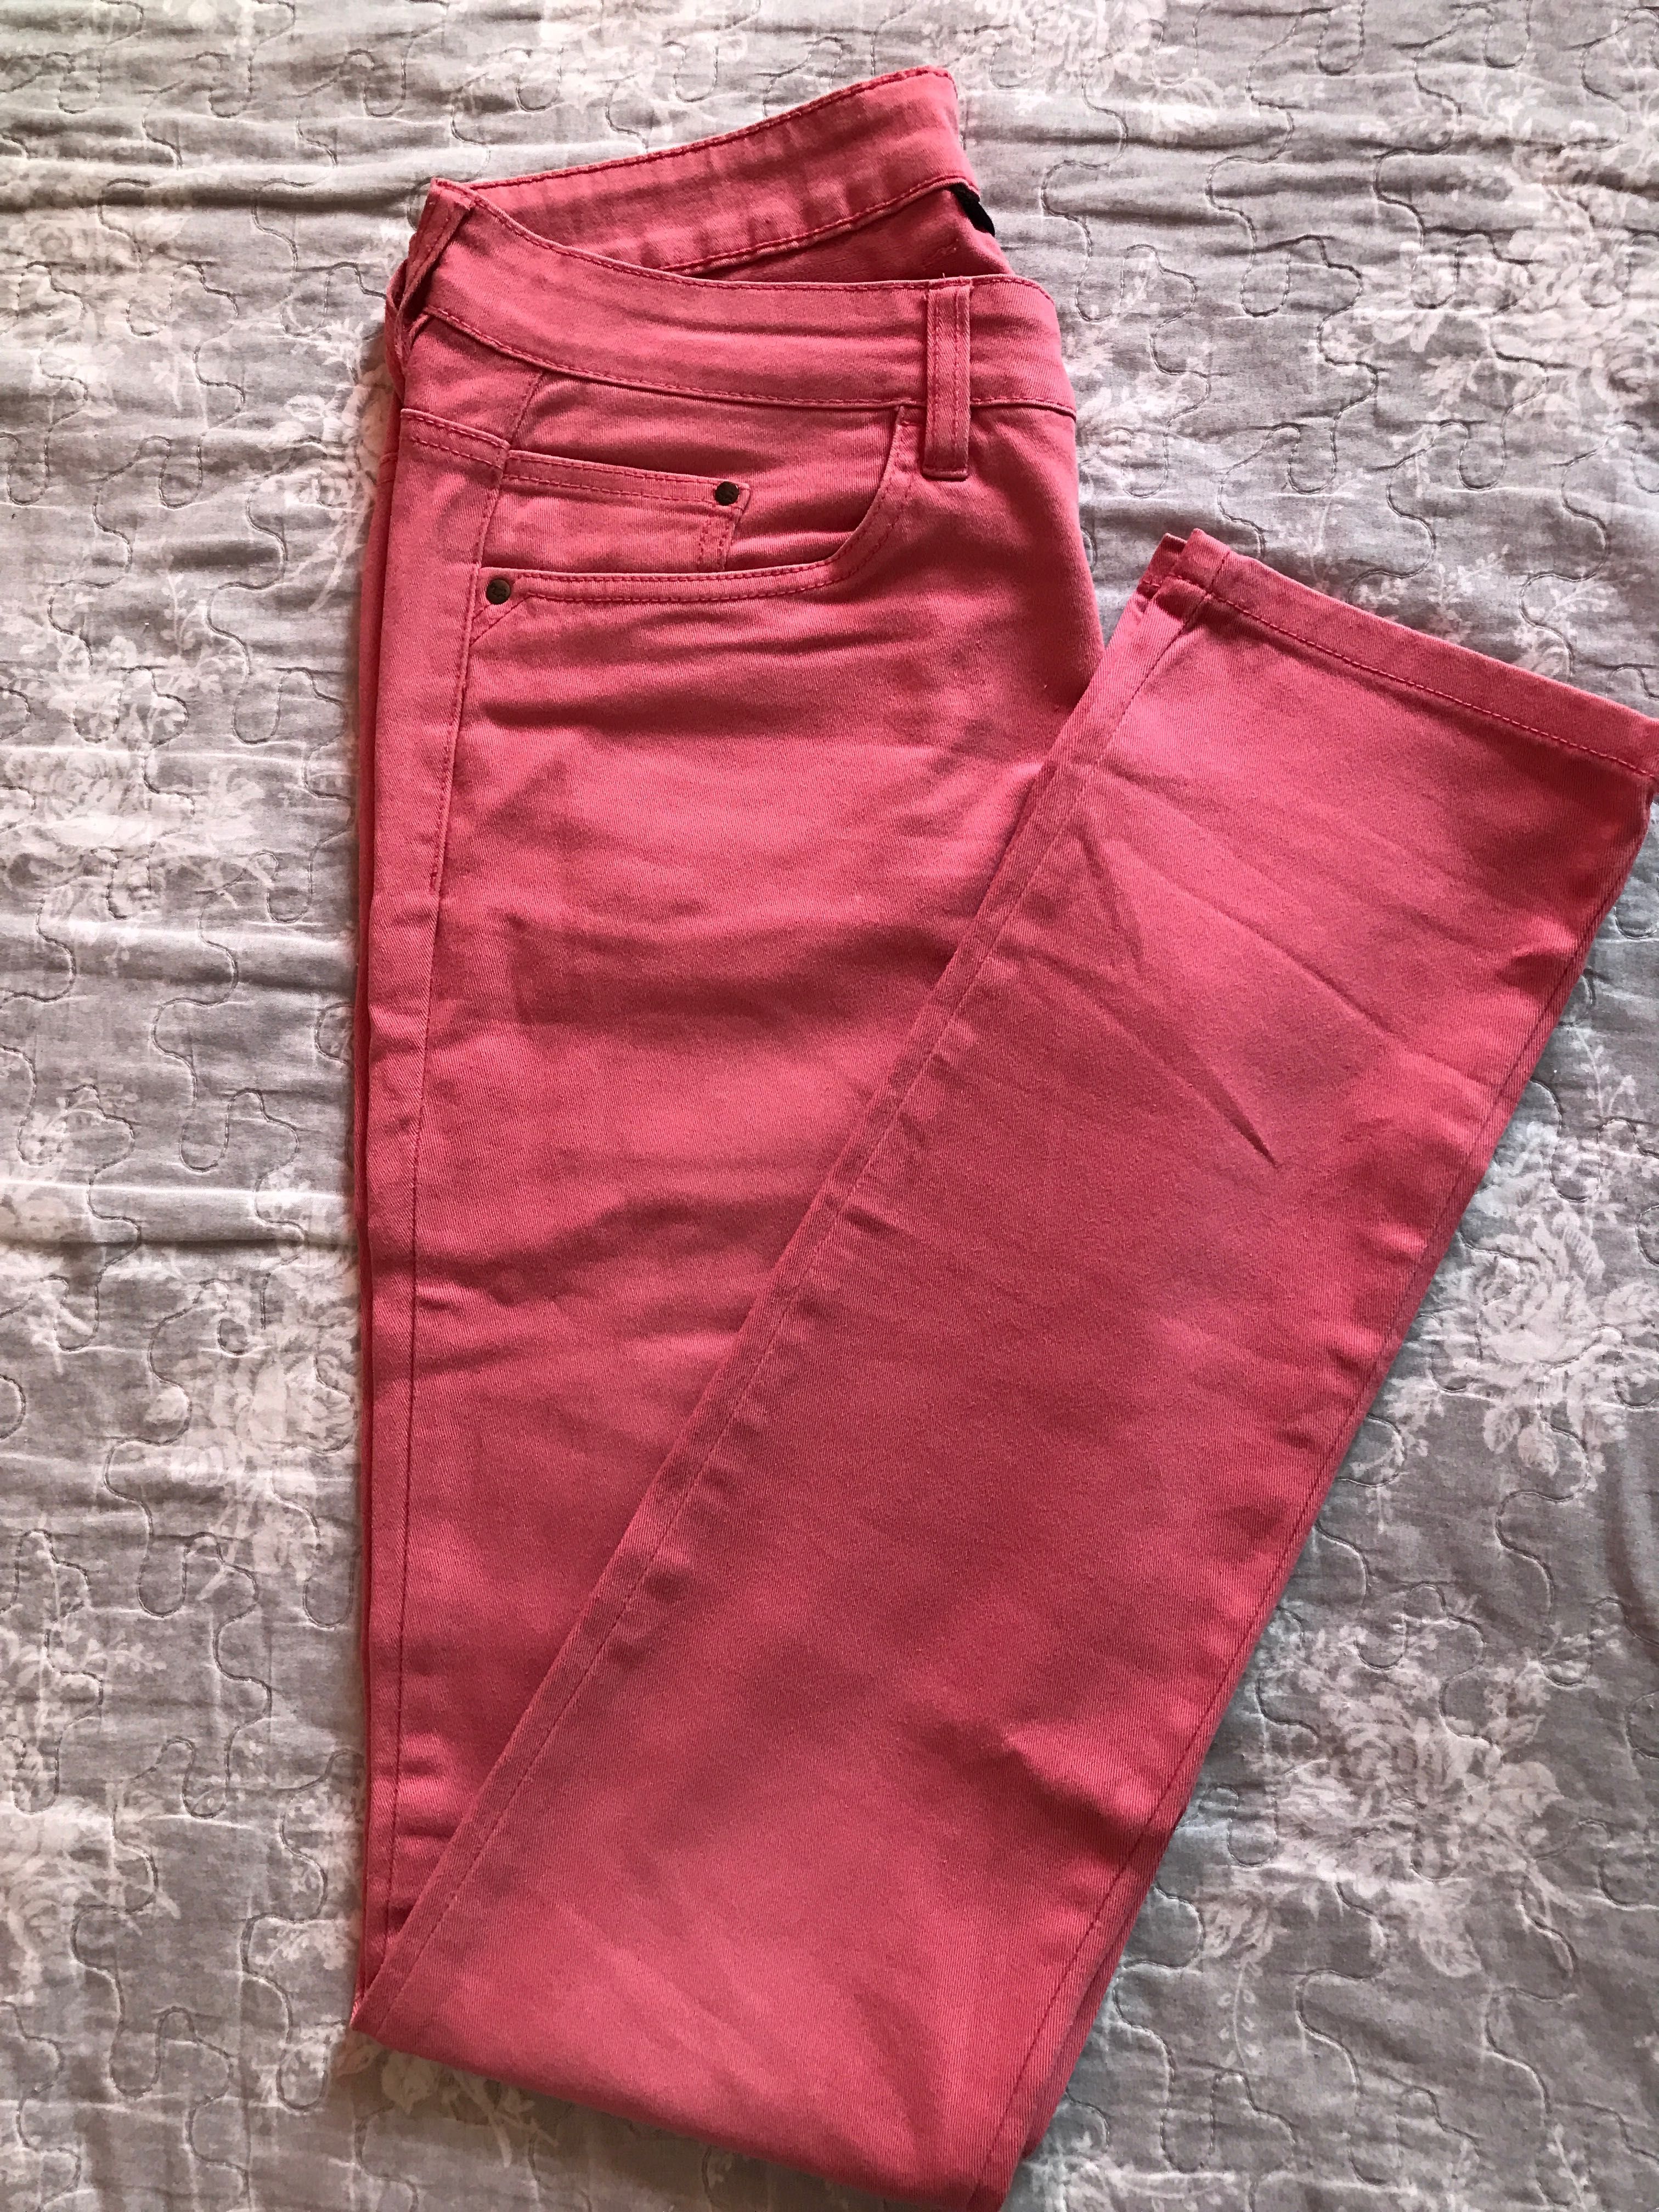 Spodnie jeansy różowe Esmara r.38